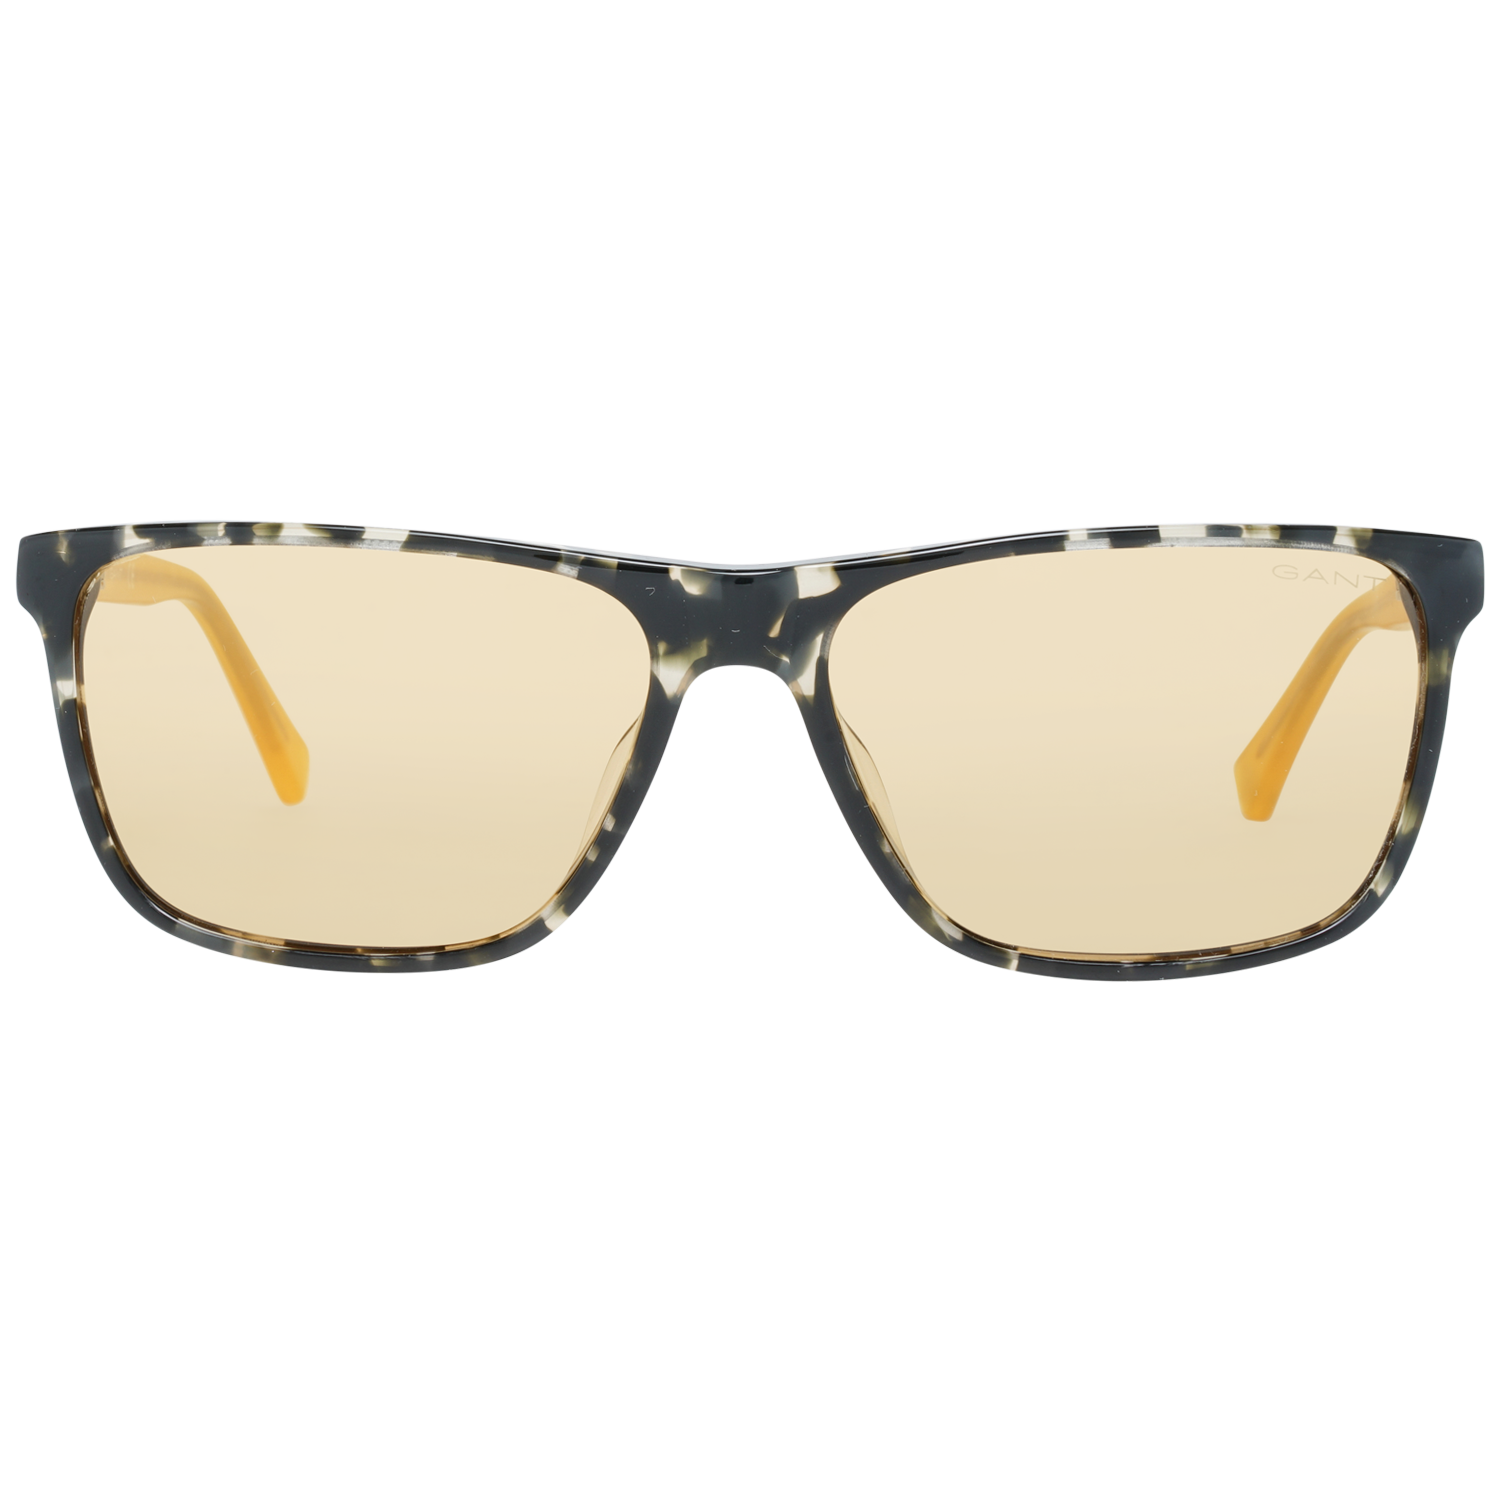 Gant Sunglasses Gant Sunglasses GA7185 55E 58 Eyeglasses Eyewear UK USA Australia 